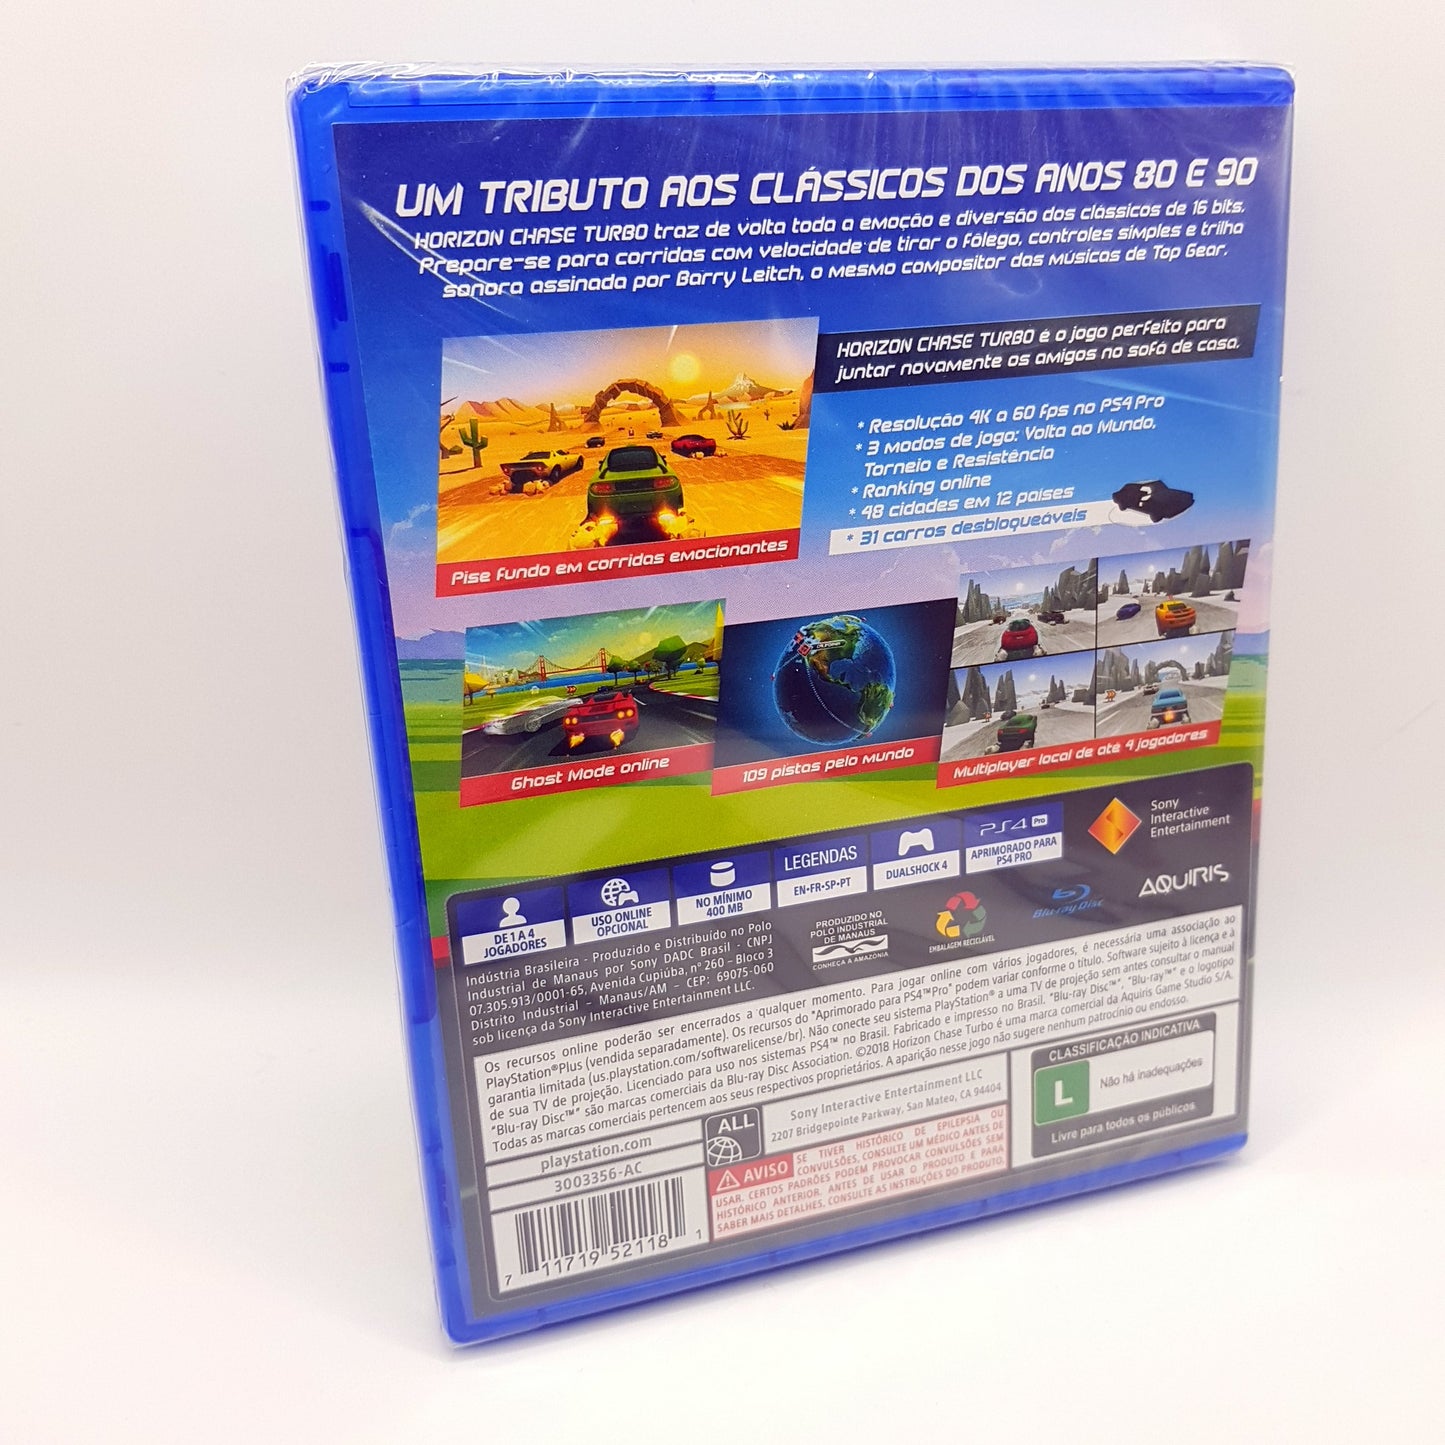 PS4 Playstation 4 - Horizon Chase Turbo (seltenes brasilianisches Spiel) - NEU sealed